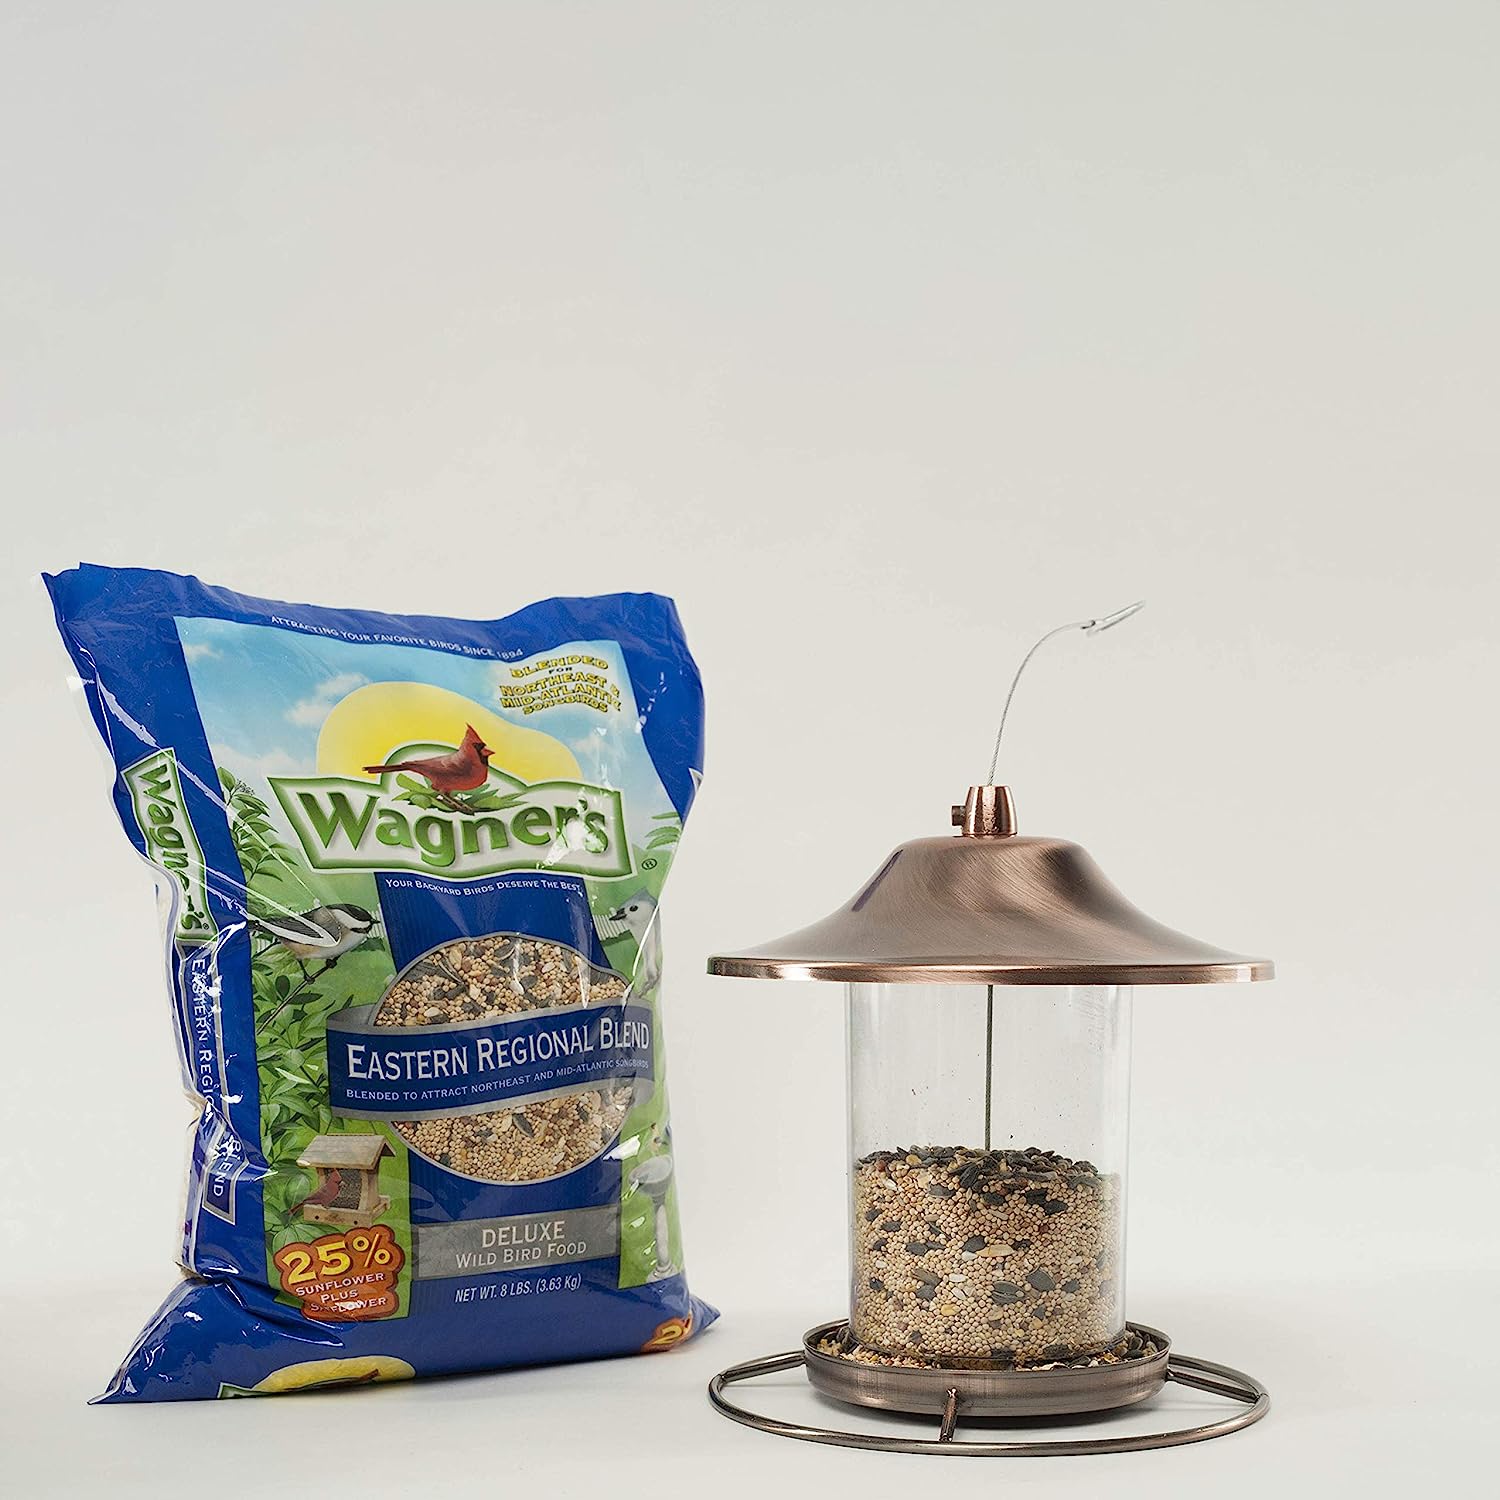 Wagner's 62004 Eastern Regional Wild Bird Food, 20-Pound Bag